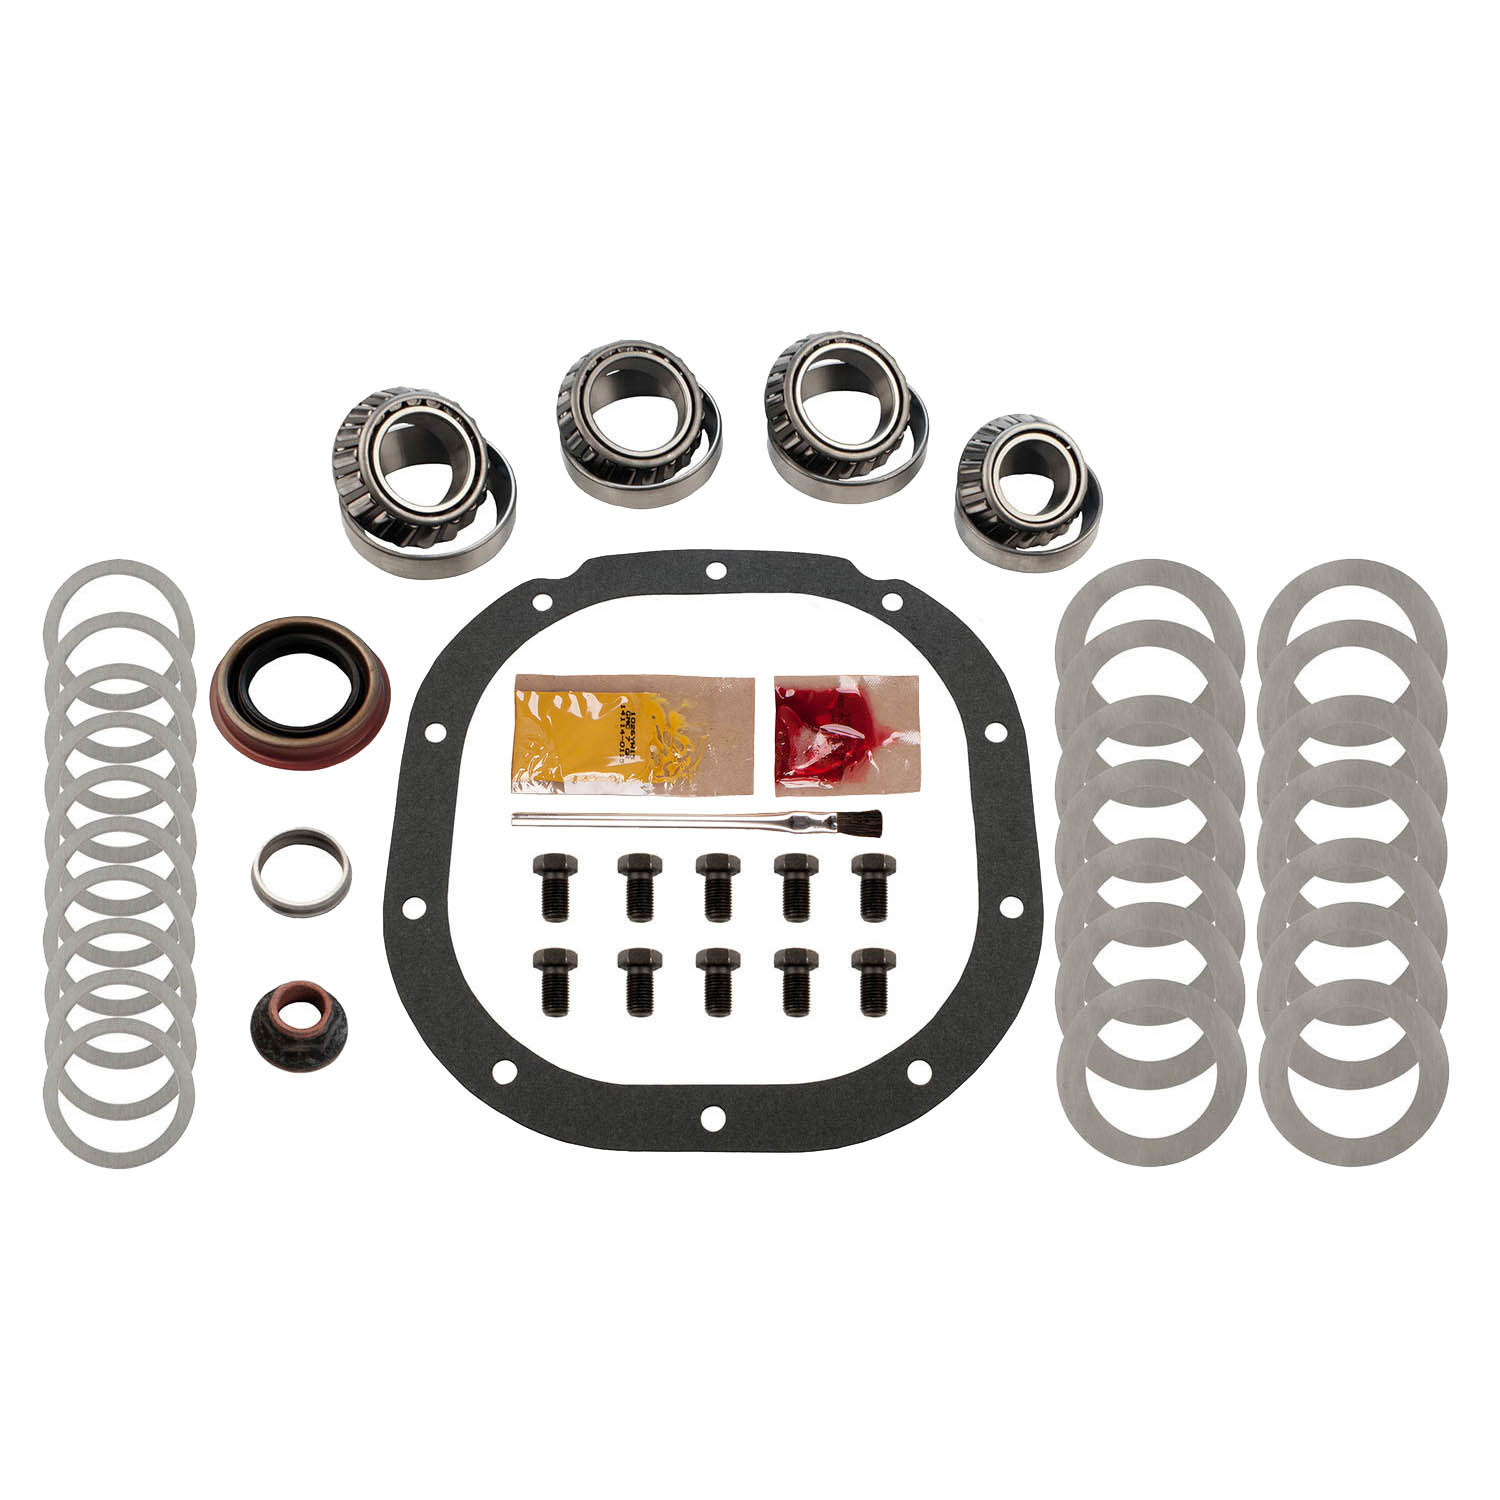 Richmond Gear 83-1043-1 - Differential Installation Kit, Bearings / Crush Sleeve / Gaskets / Hardware / Seals / Shims / Thread Locker, Ford 8.8 in, Kit